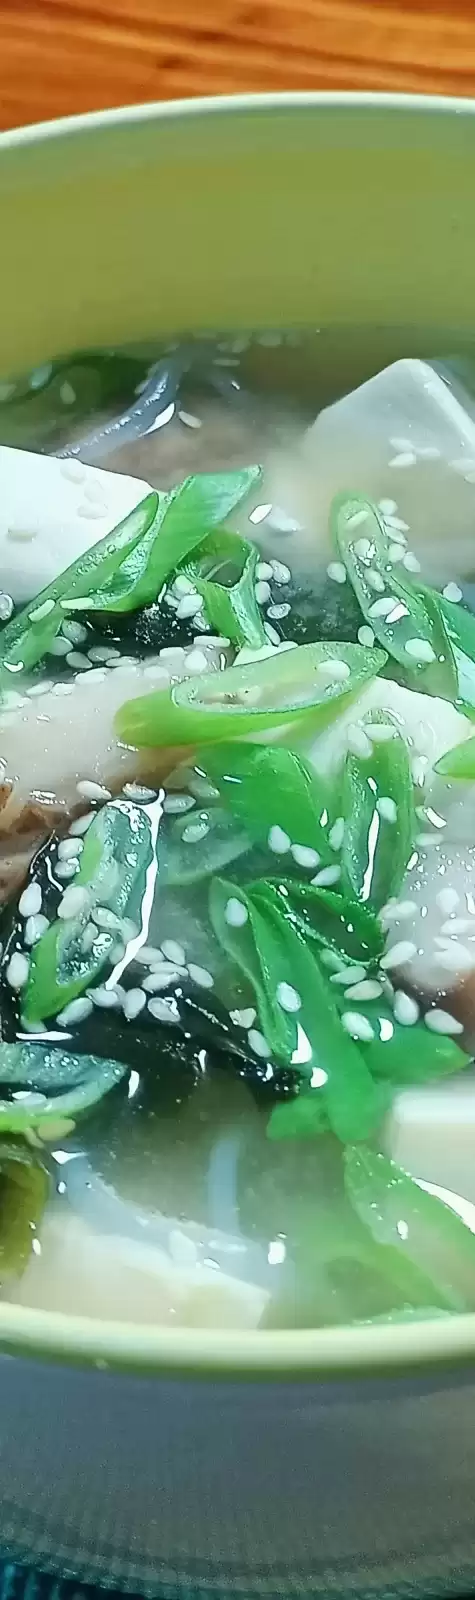 Close up view of Vegan Miso Soup